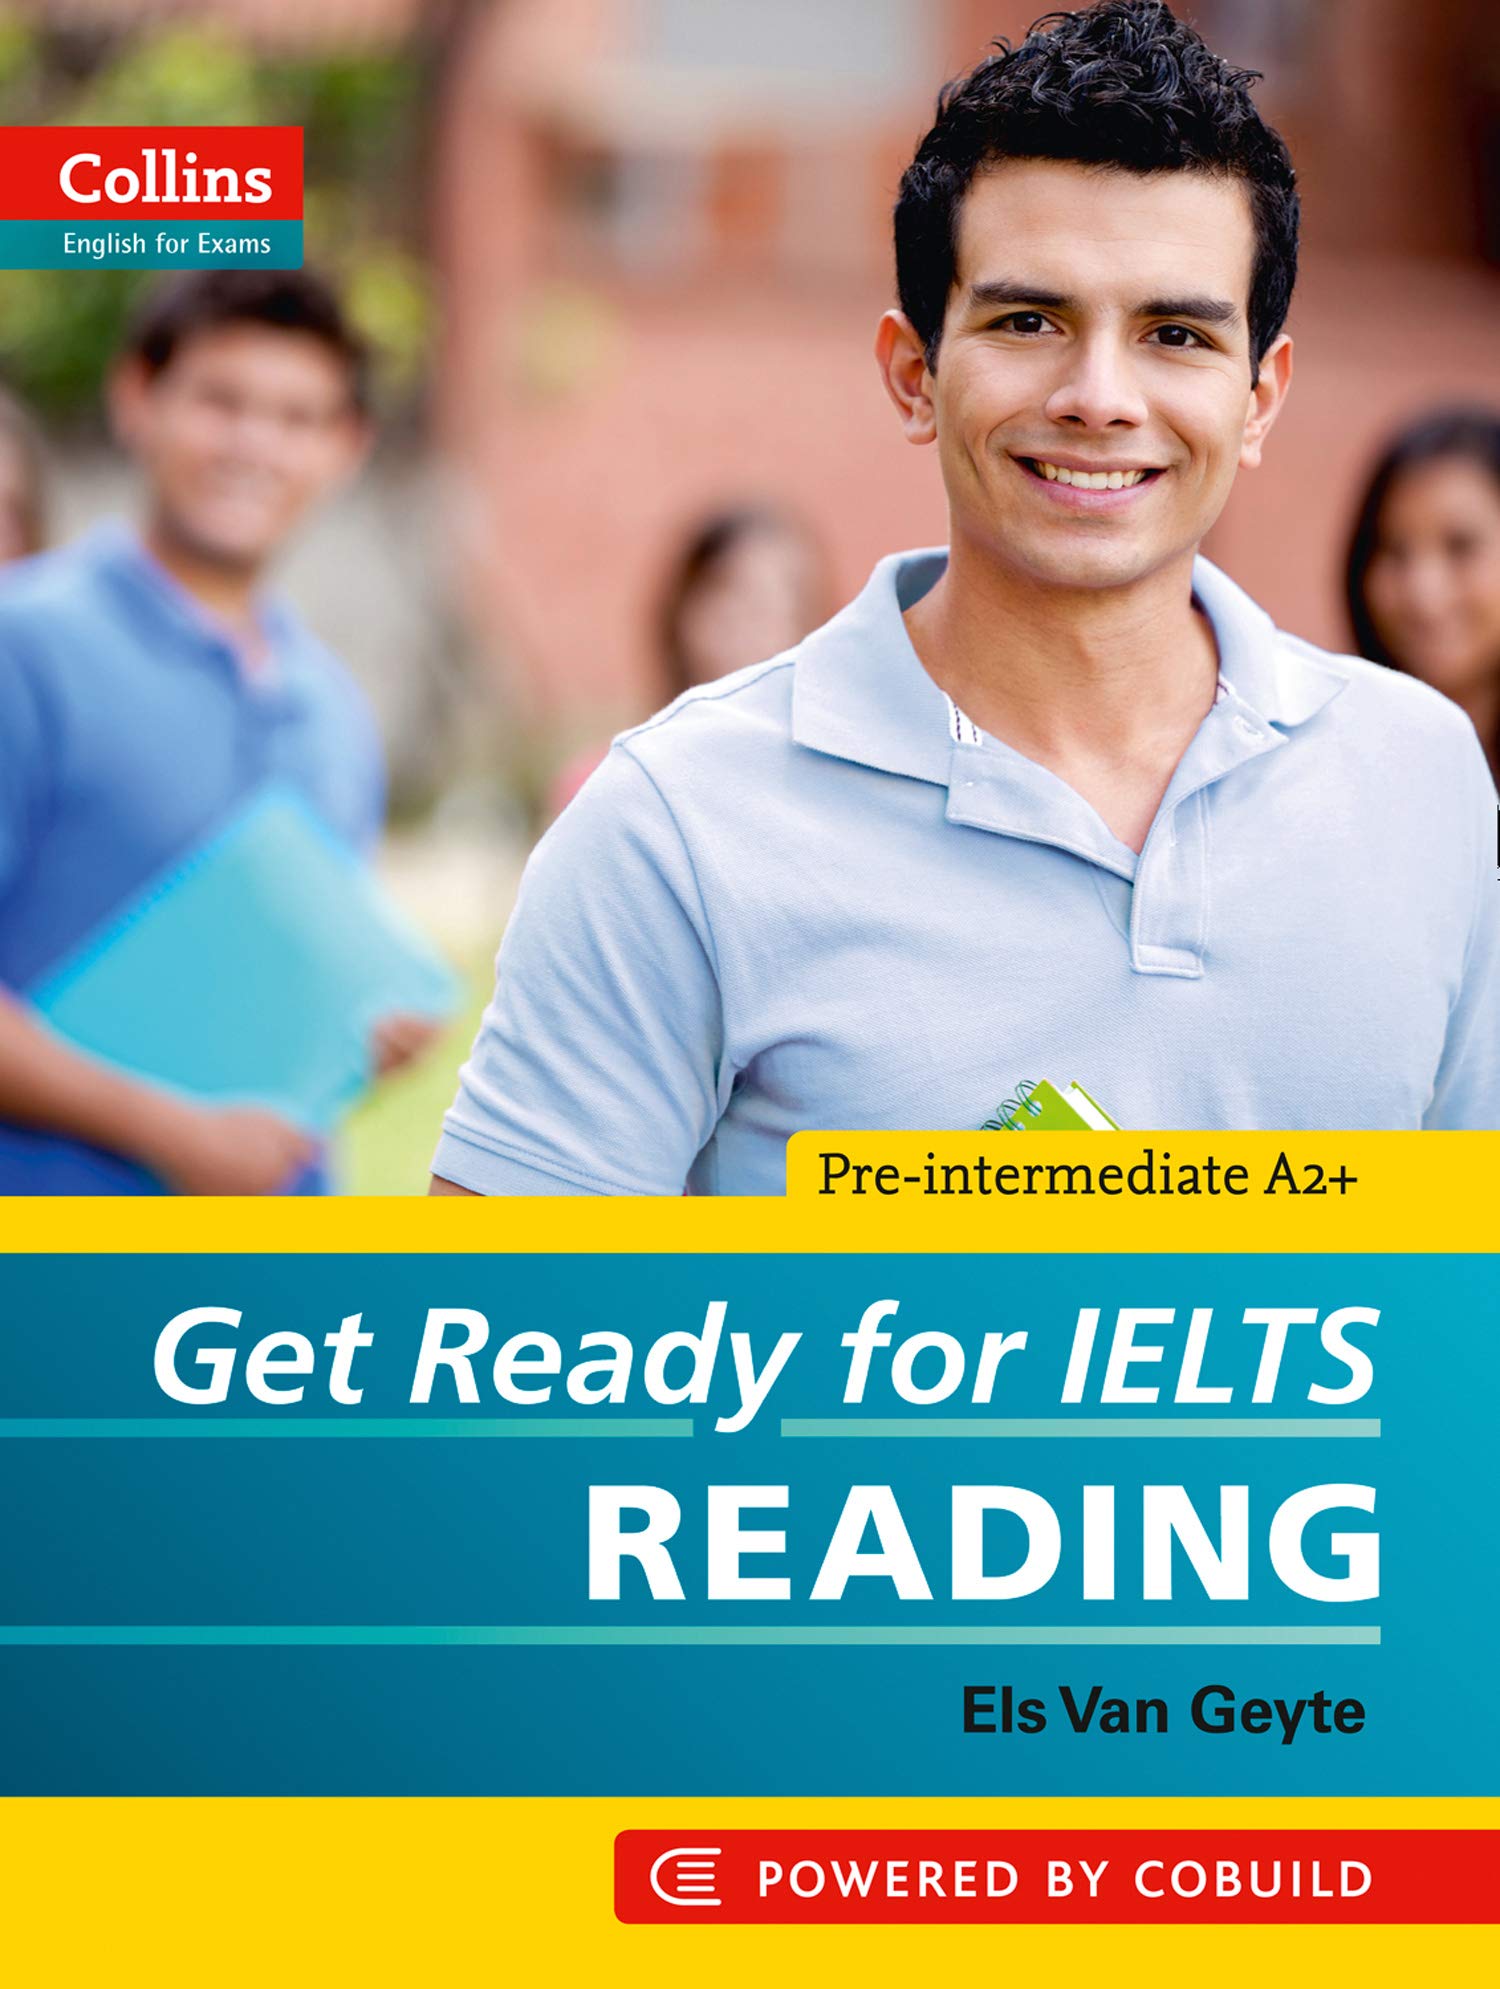 Get Ready for IELTS - Reading | Els Van Geyte